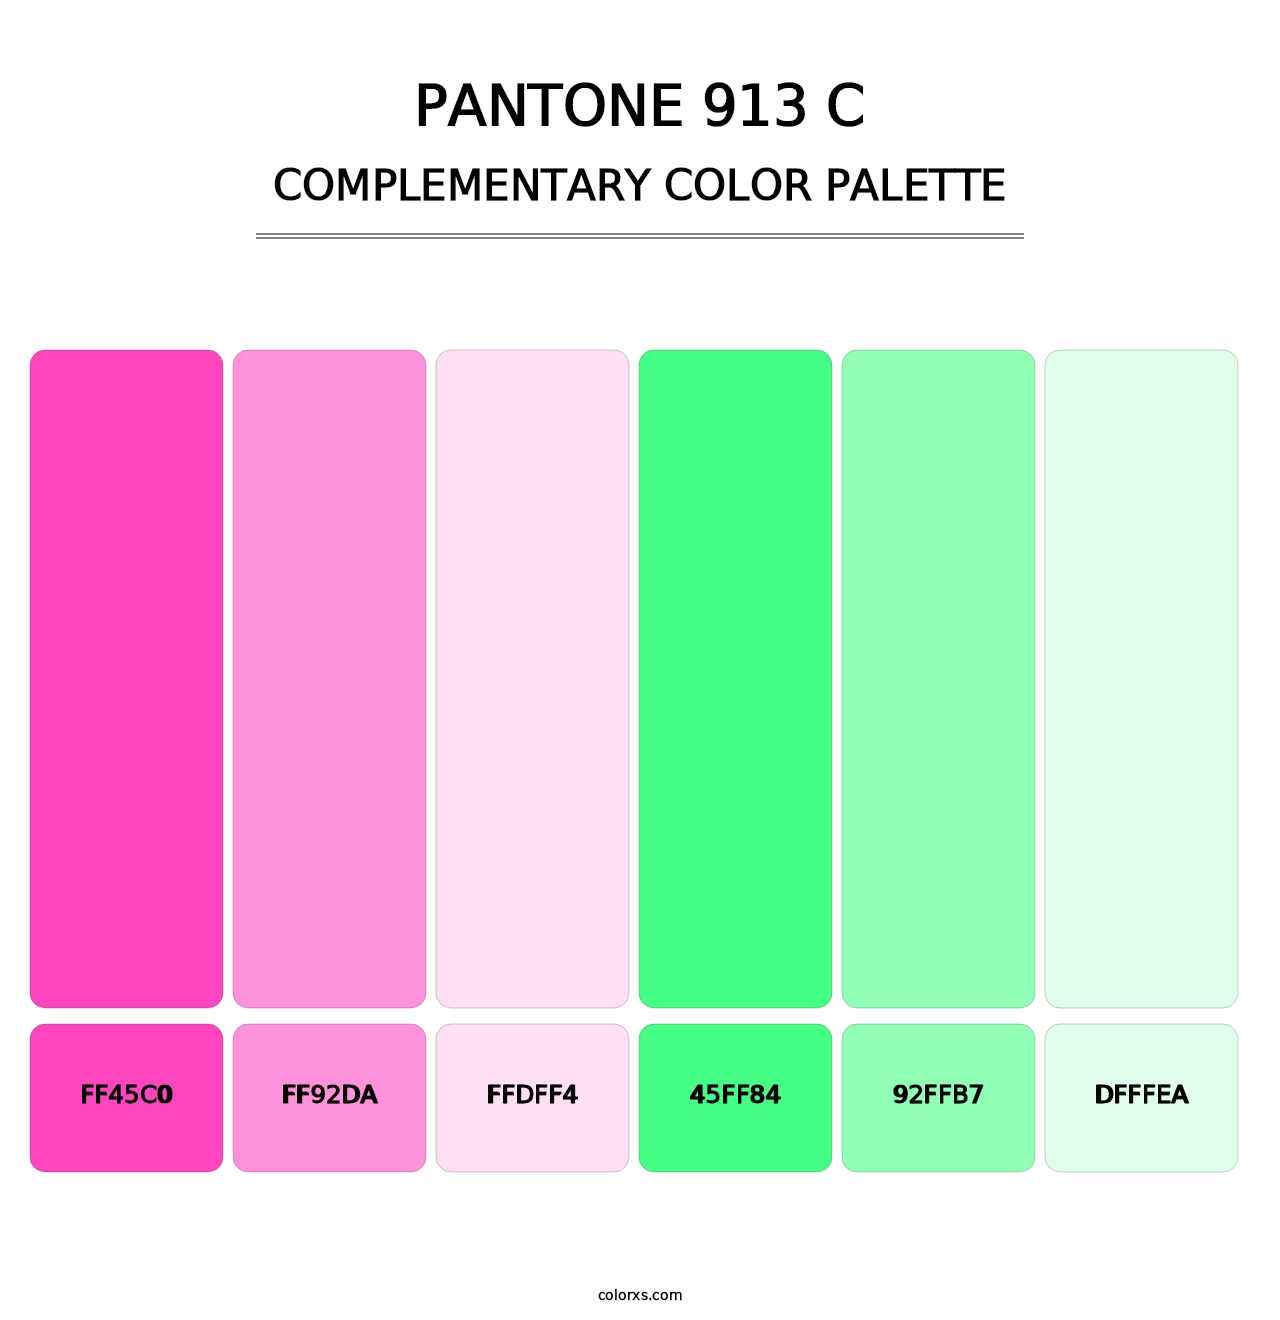 PANTONE 913 C - Complementary Color Palette